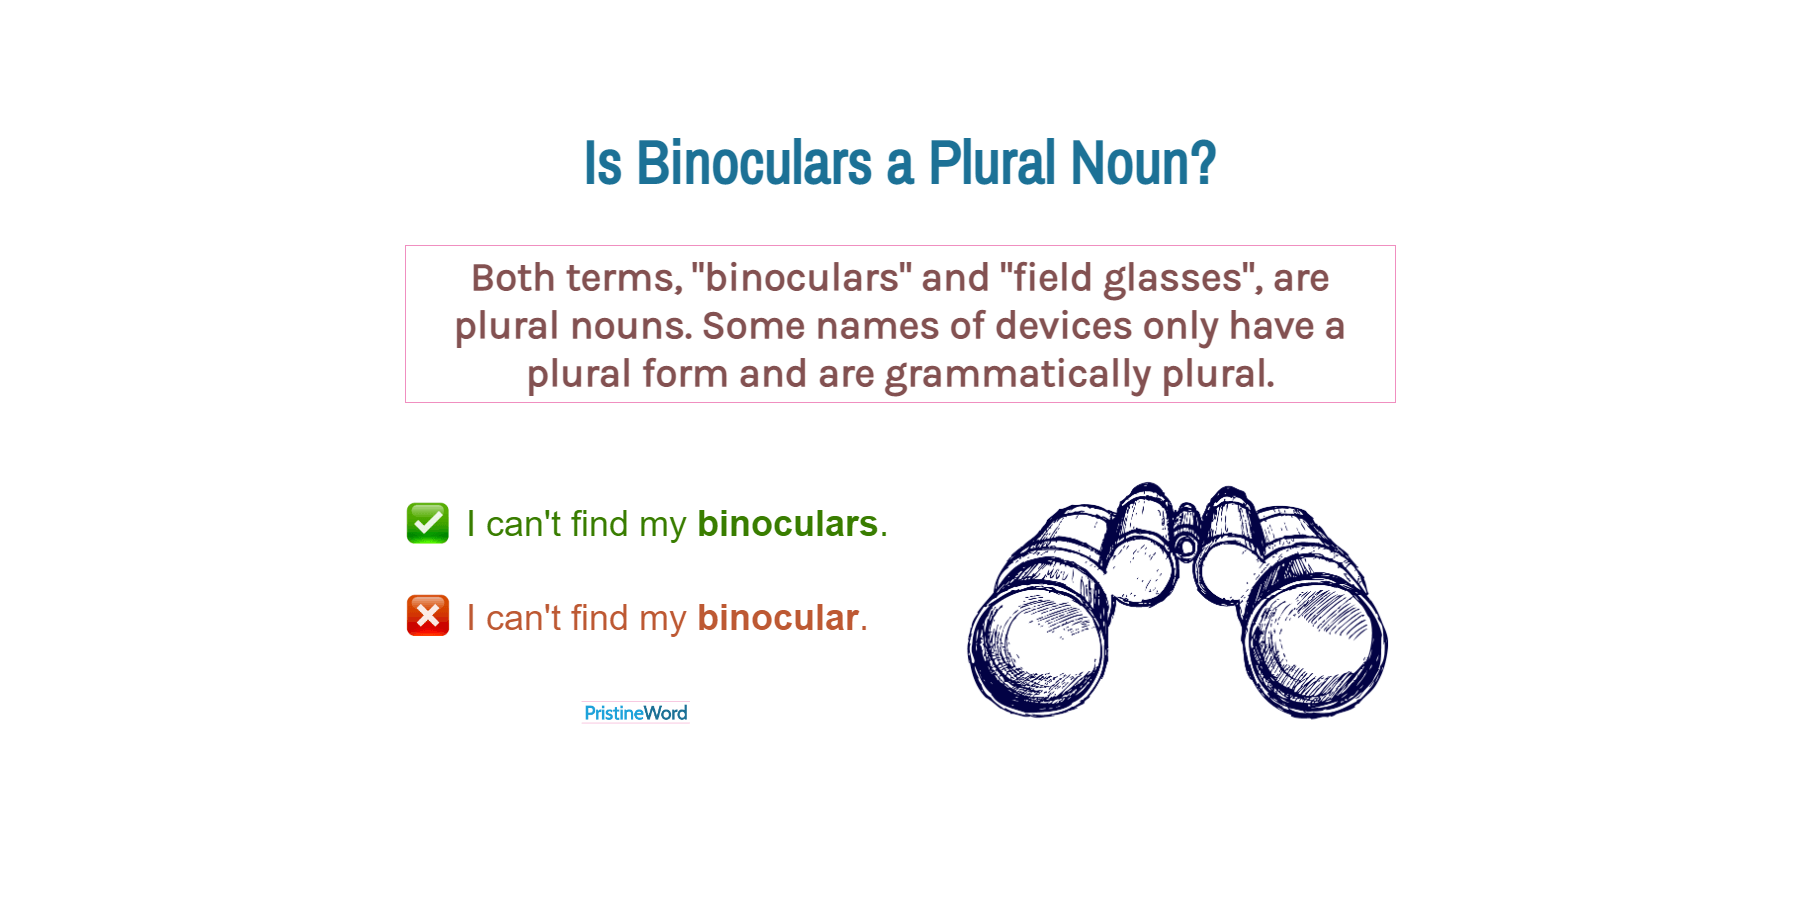 Is Binoculars a Plural Noun?